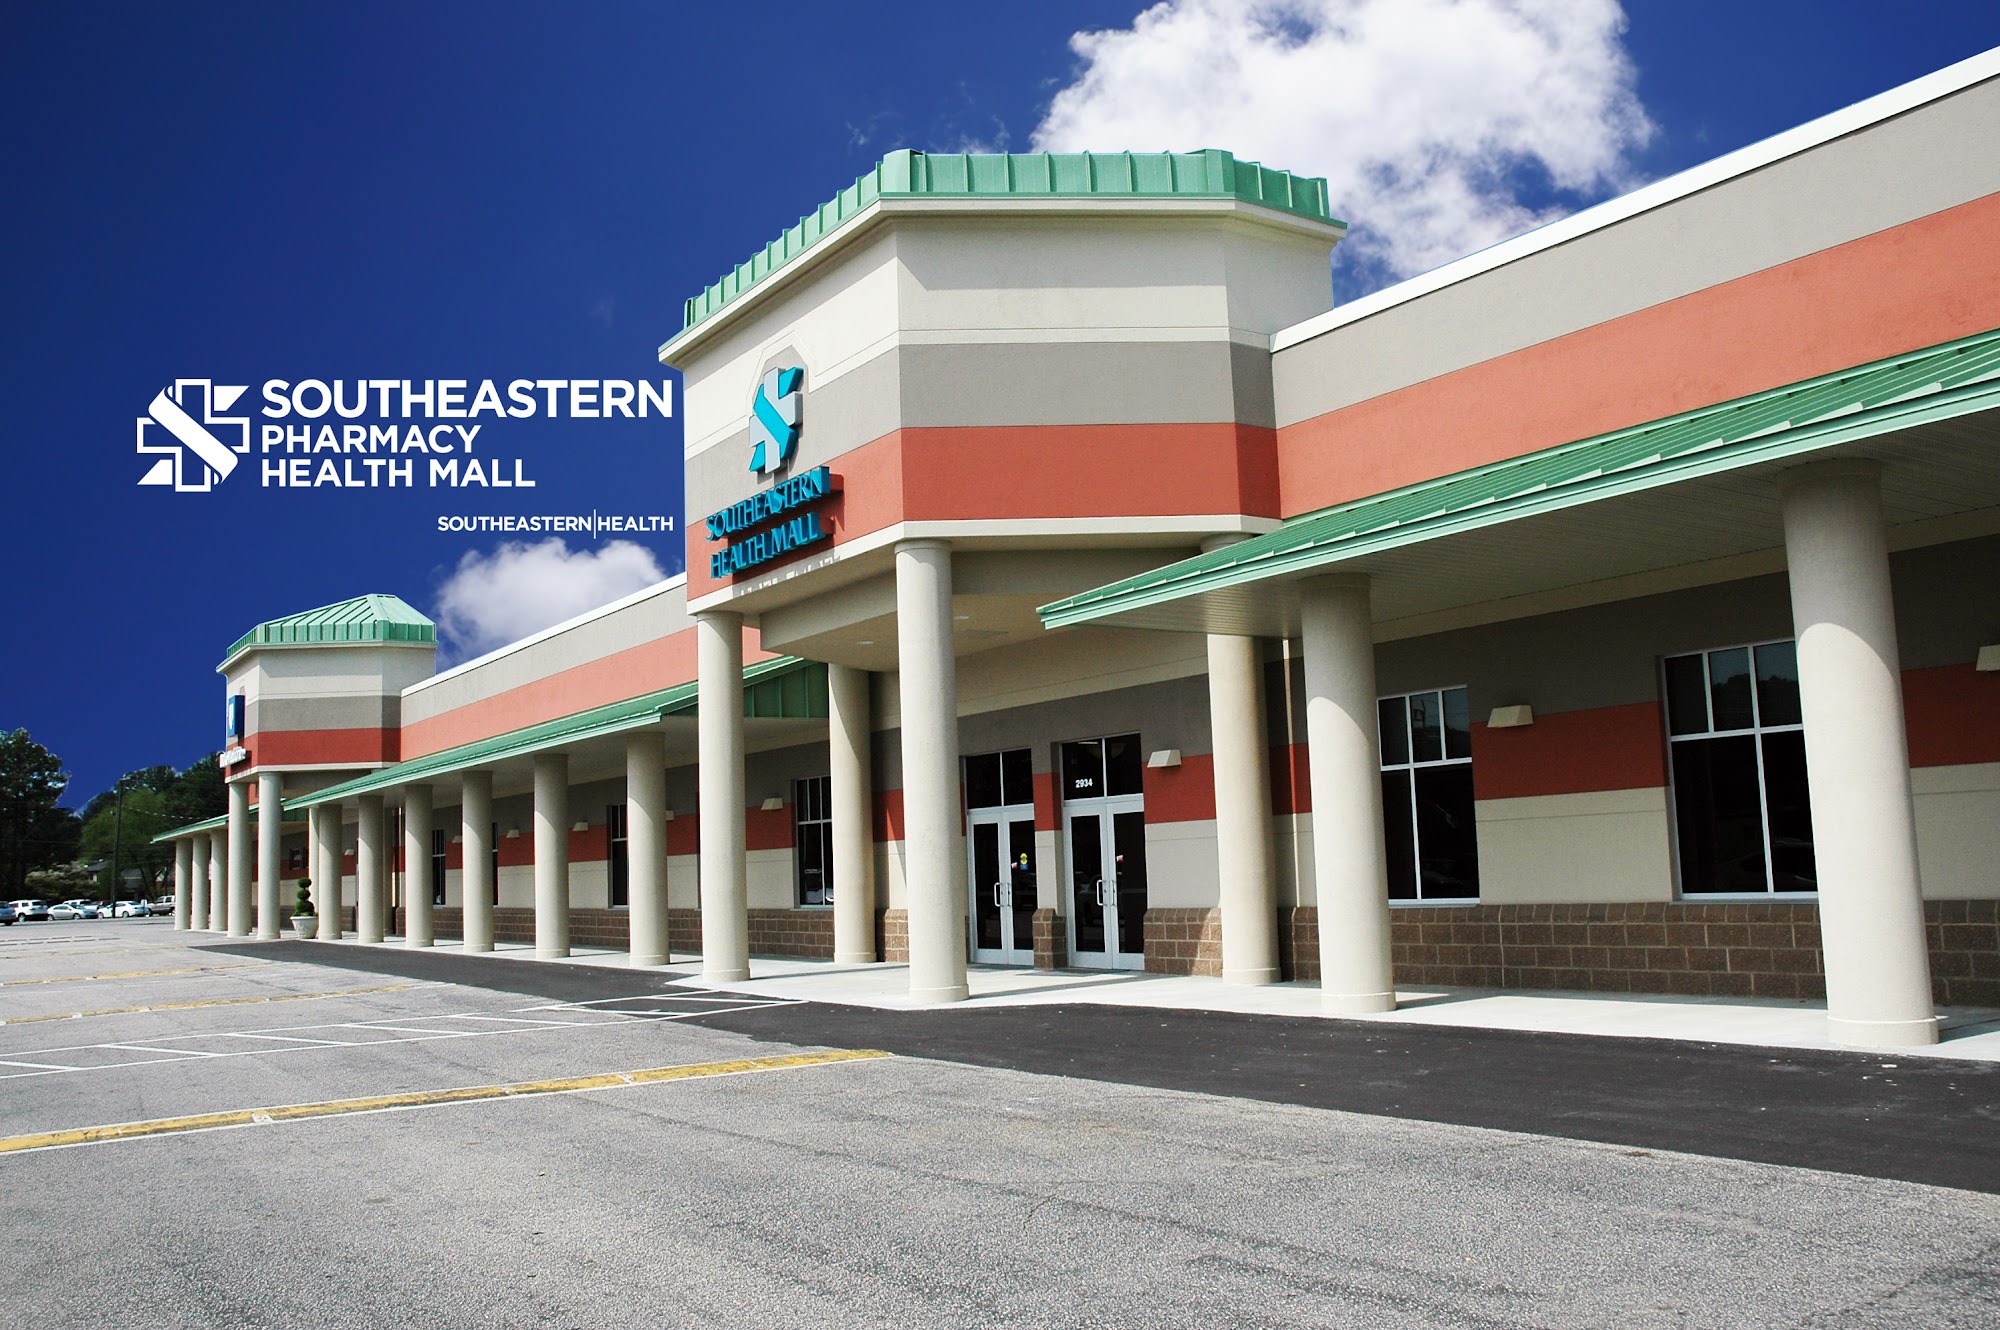 Southeastern Pharmacy Health Mall